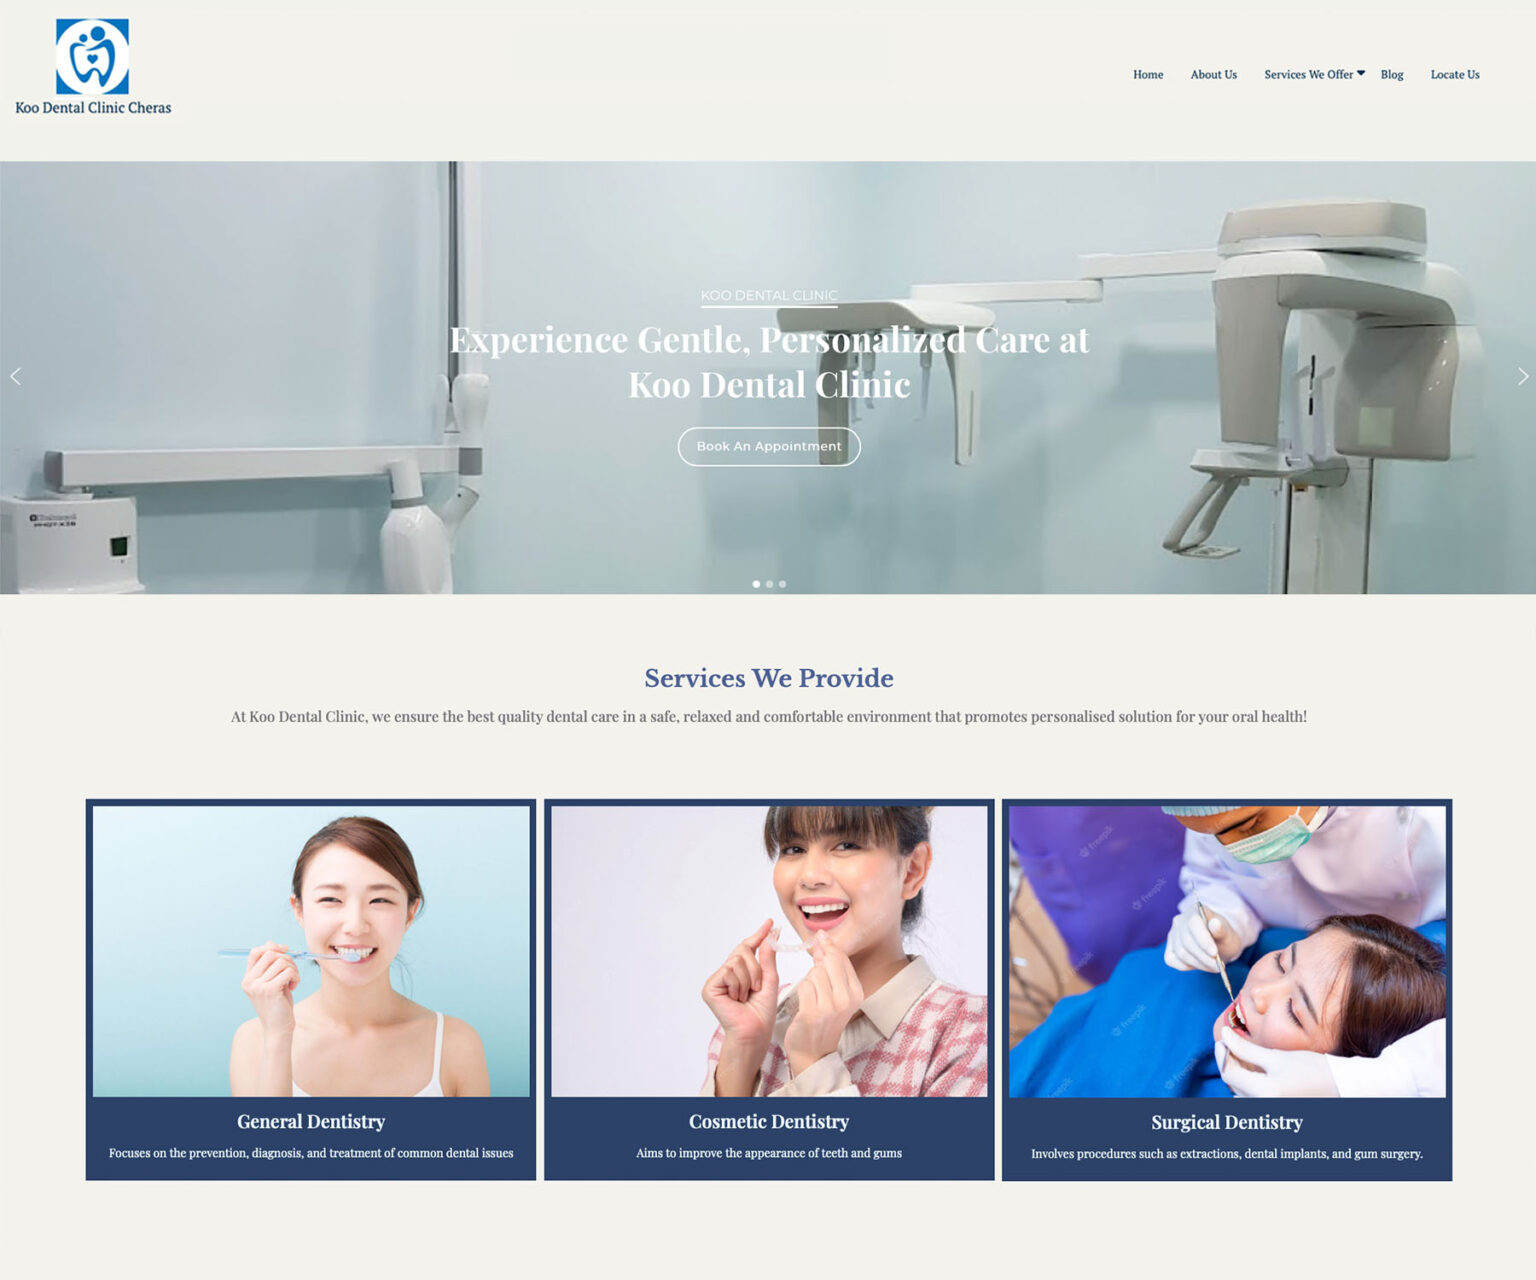 Malaysia Based Dental Clinic